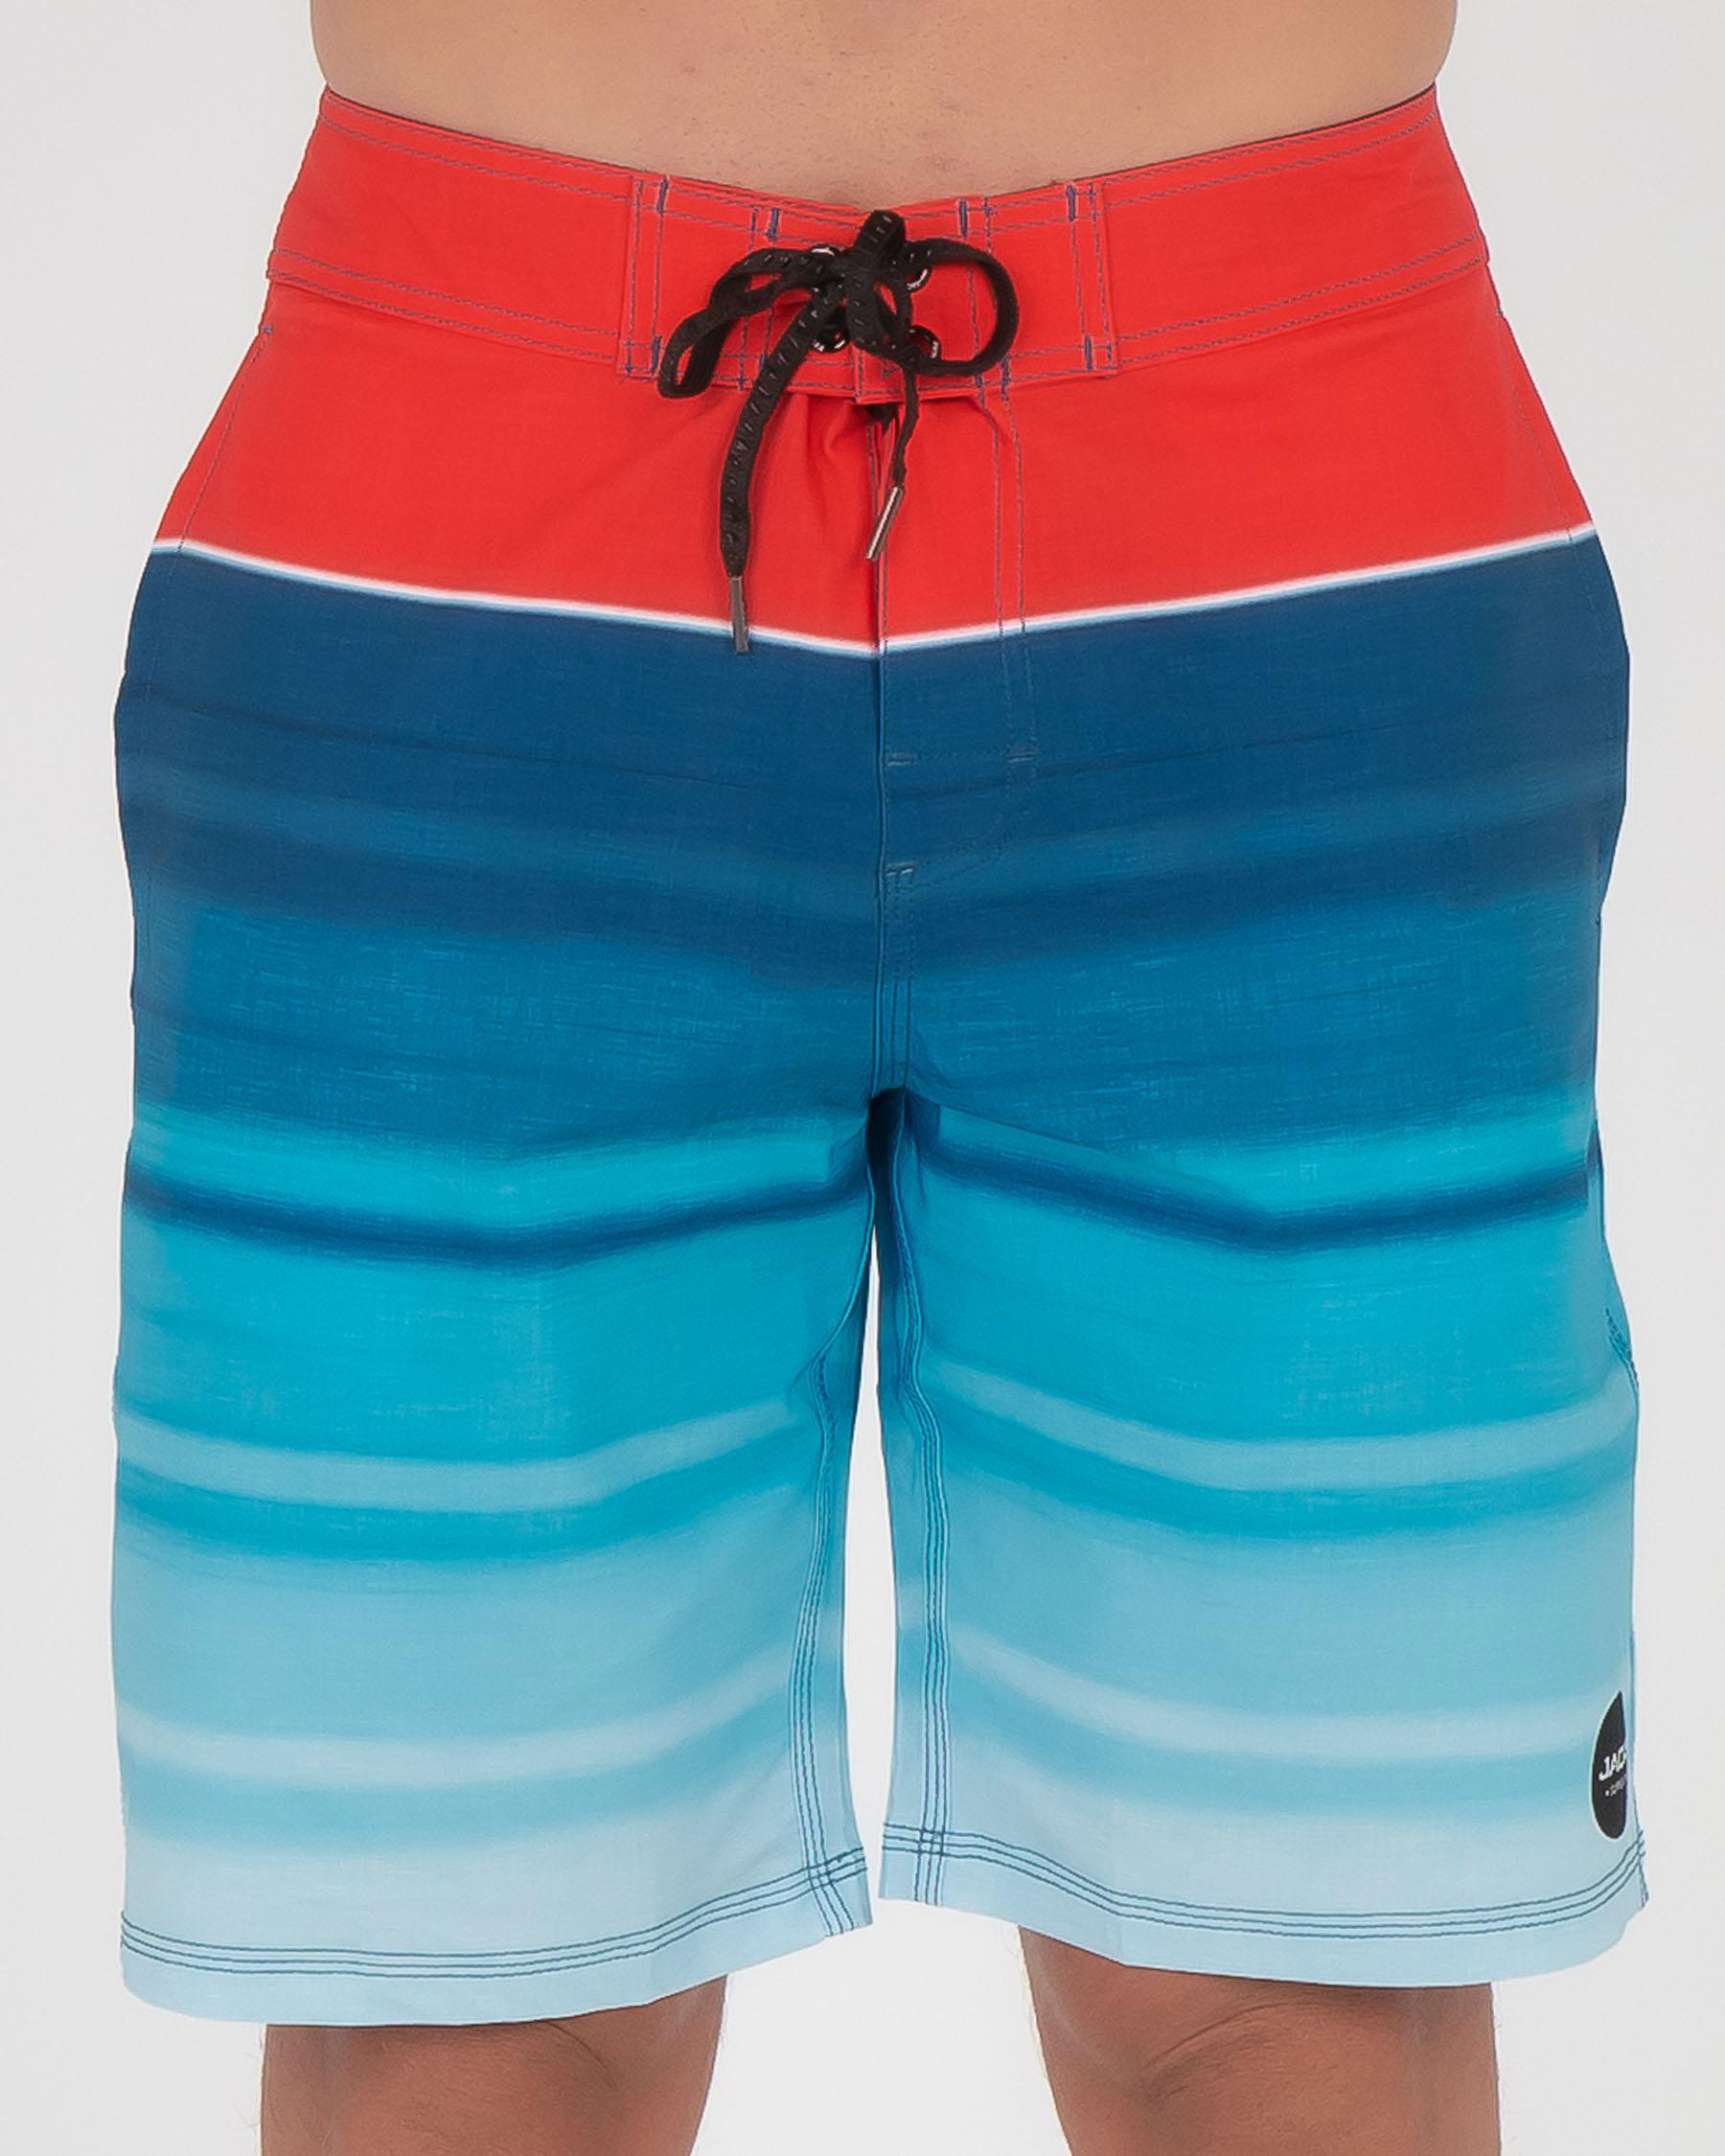 Jacks Pacific Board Shorts In Red/blue | City Beach Australia